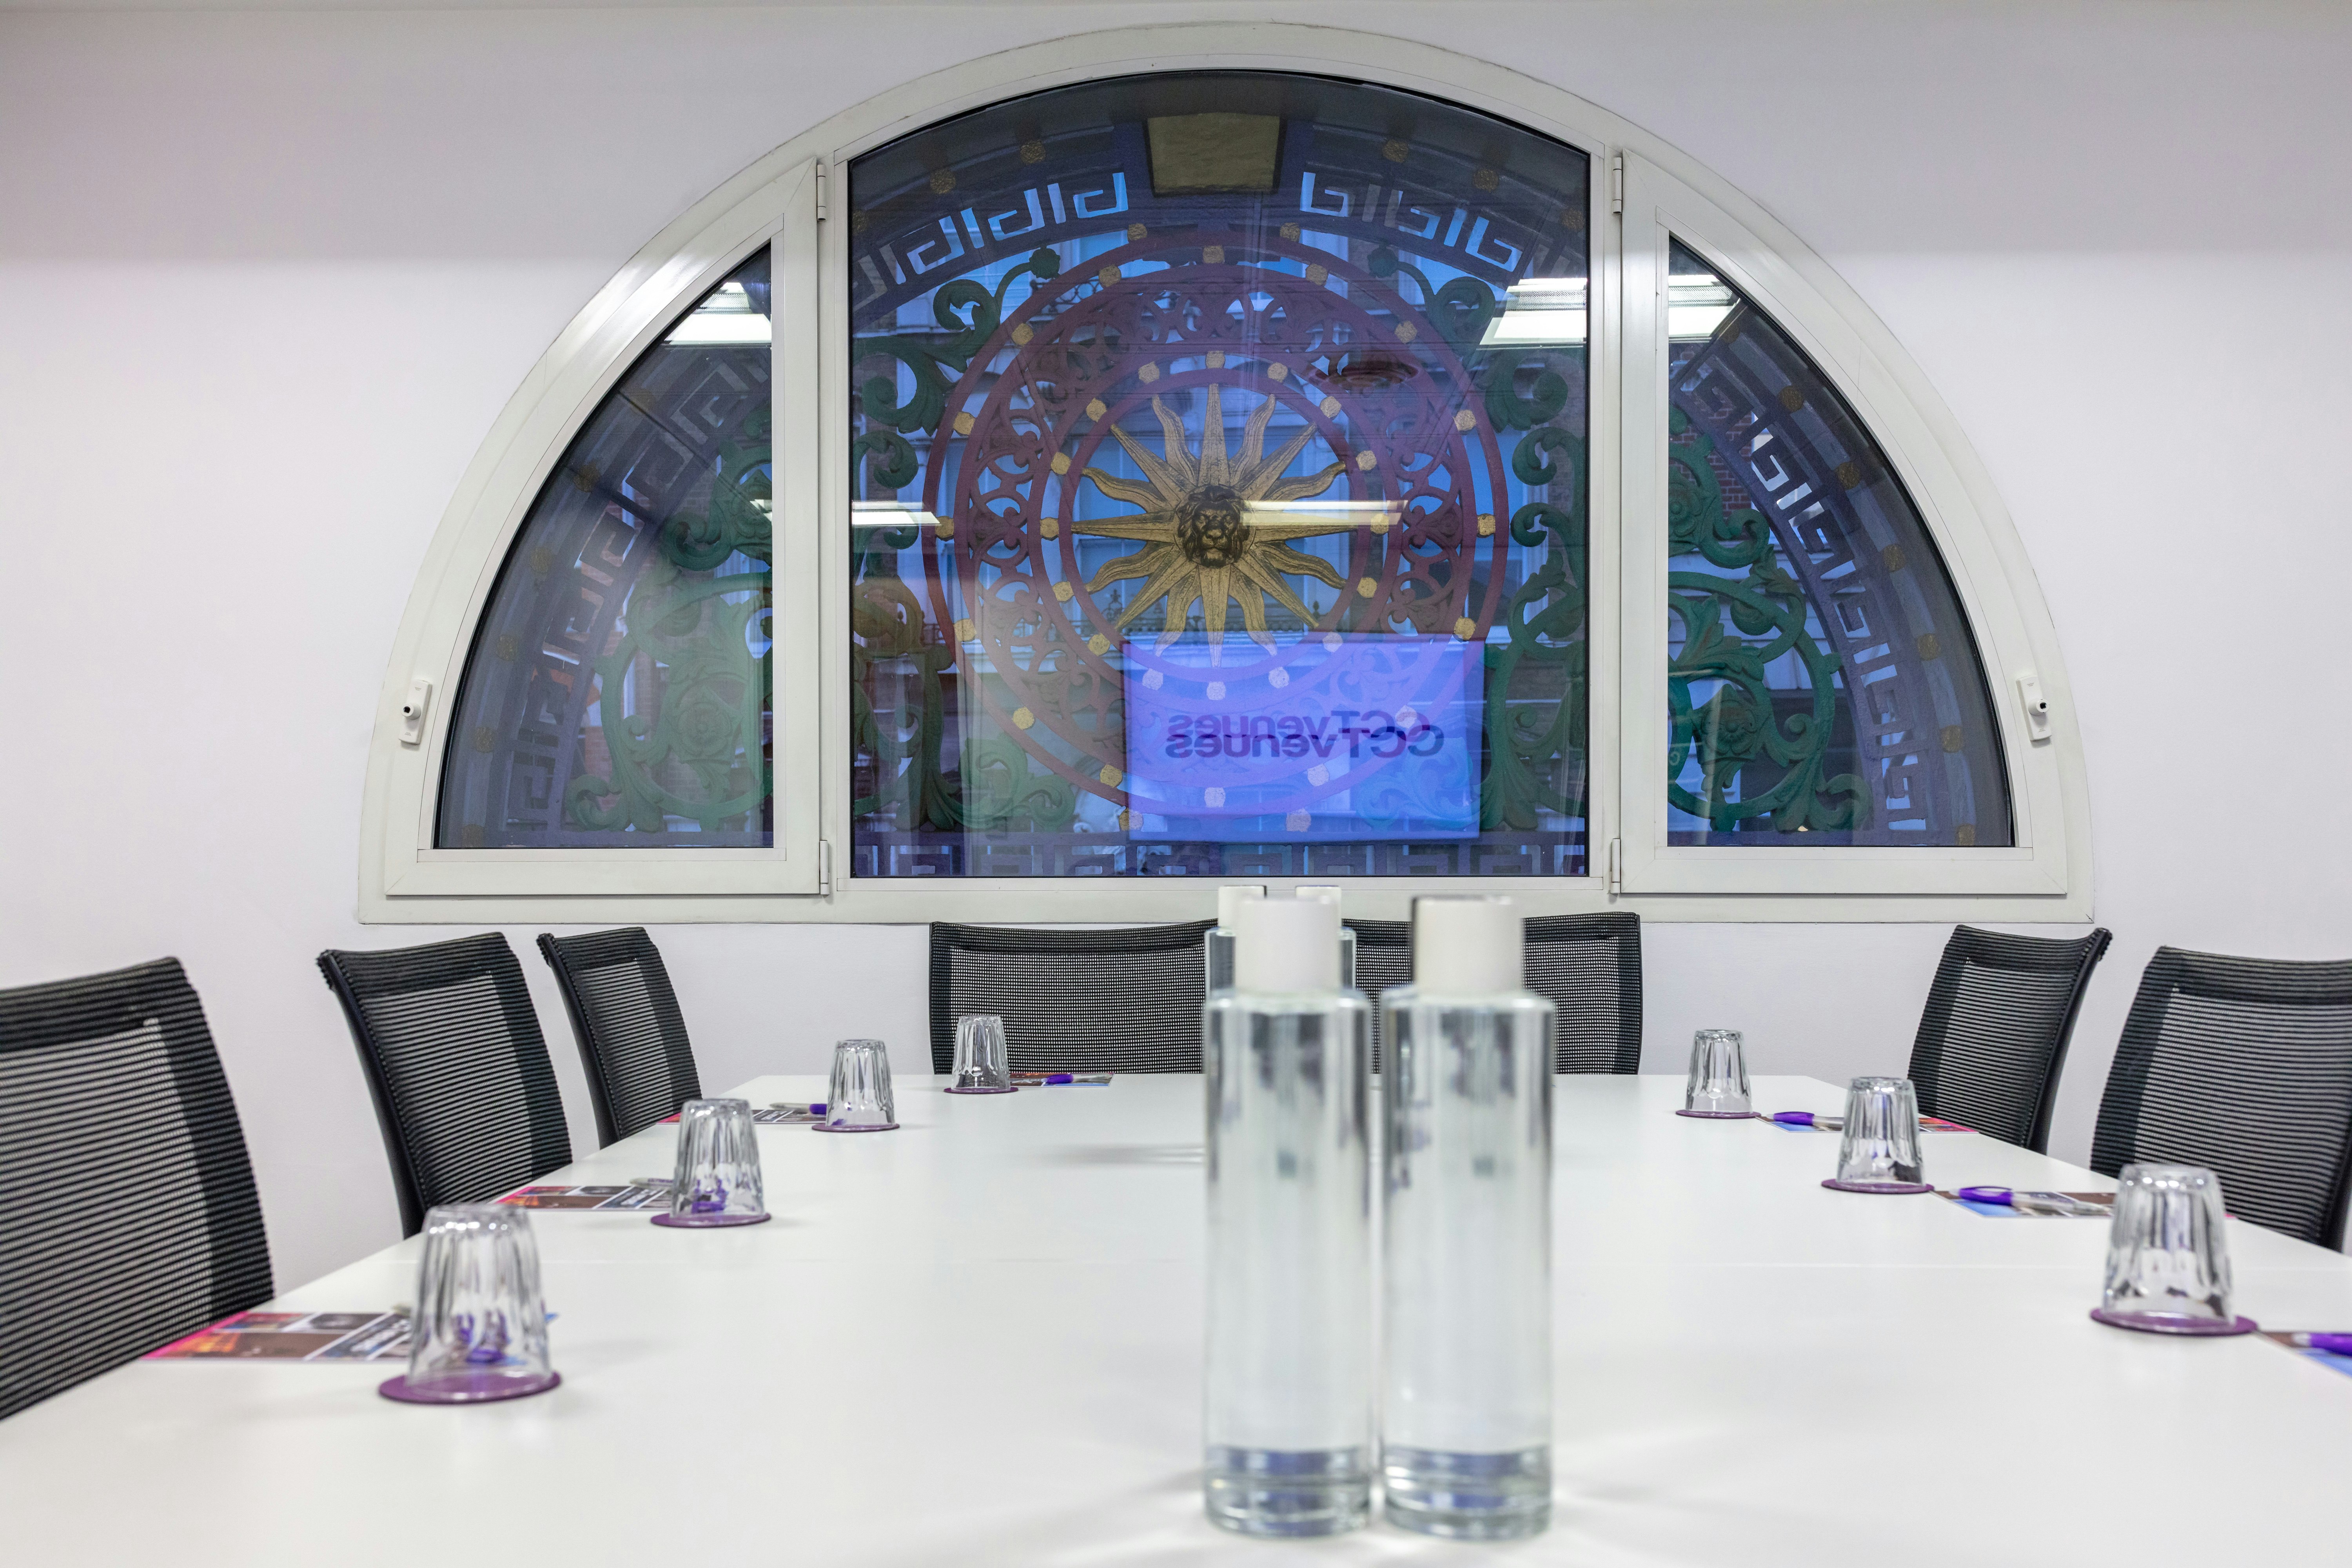 CCT Venues - Smithfield (City of London) - Meeting Room 1 image 1